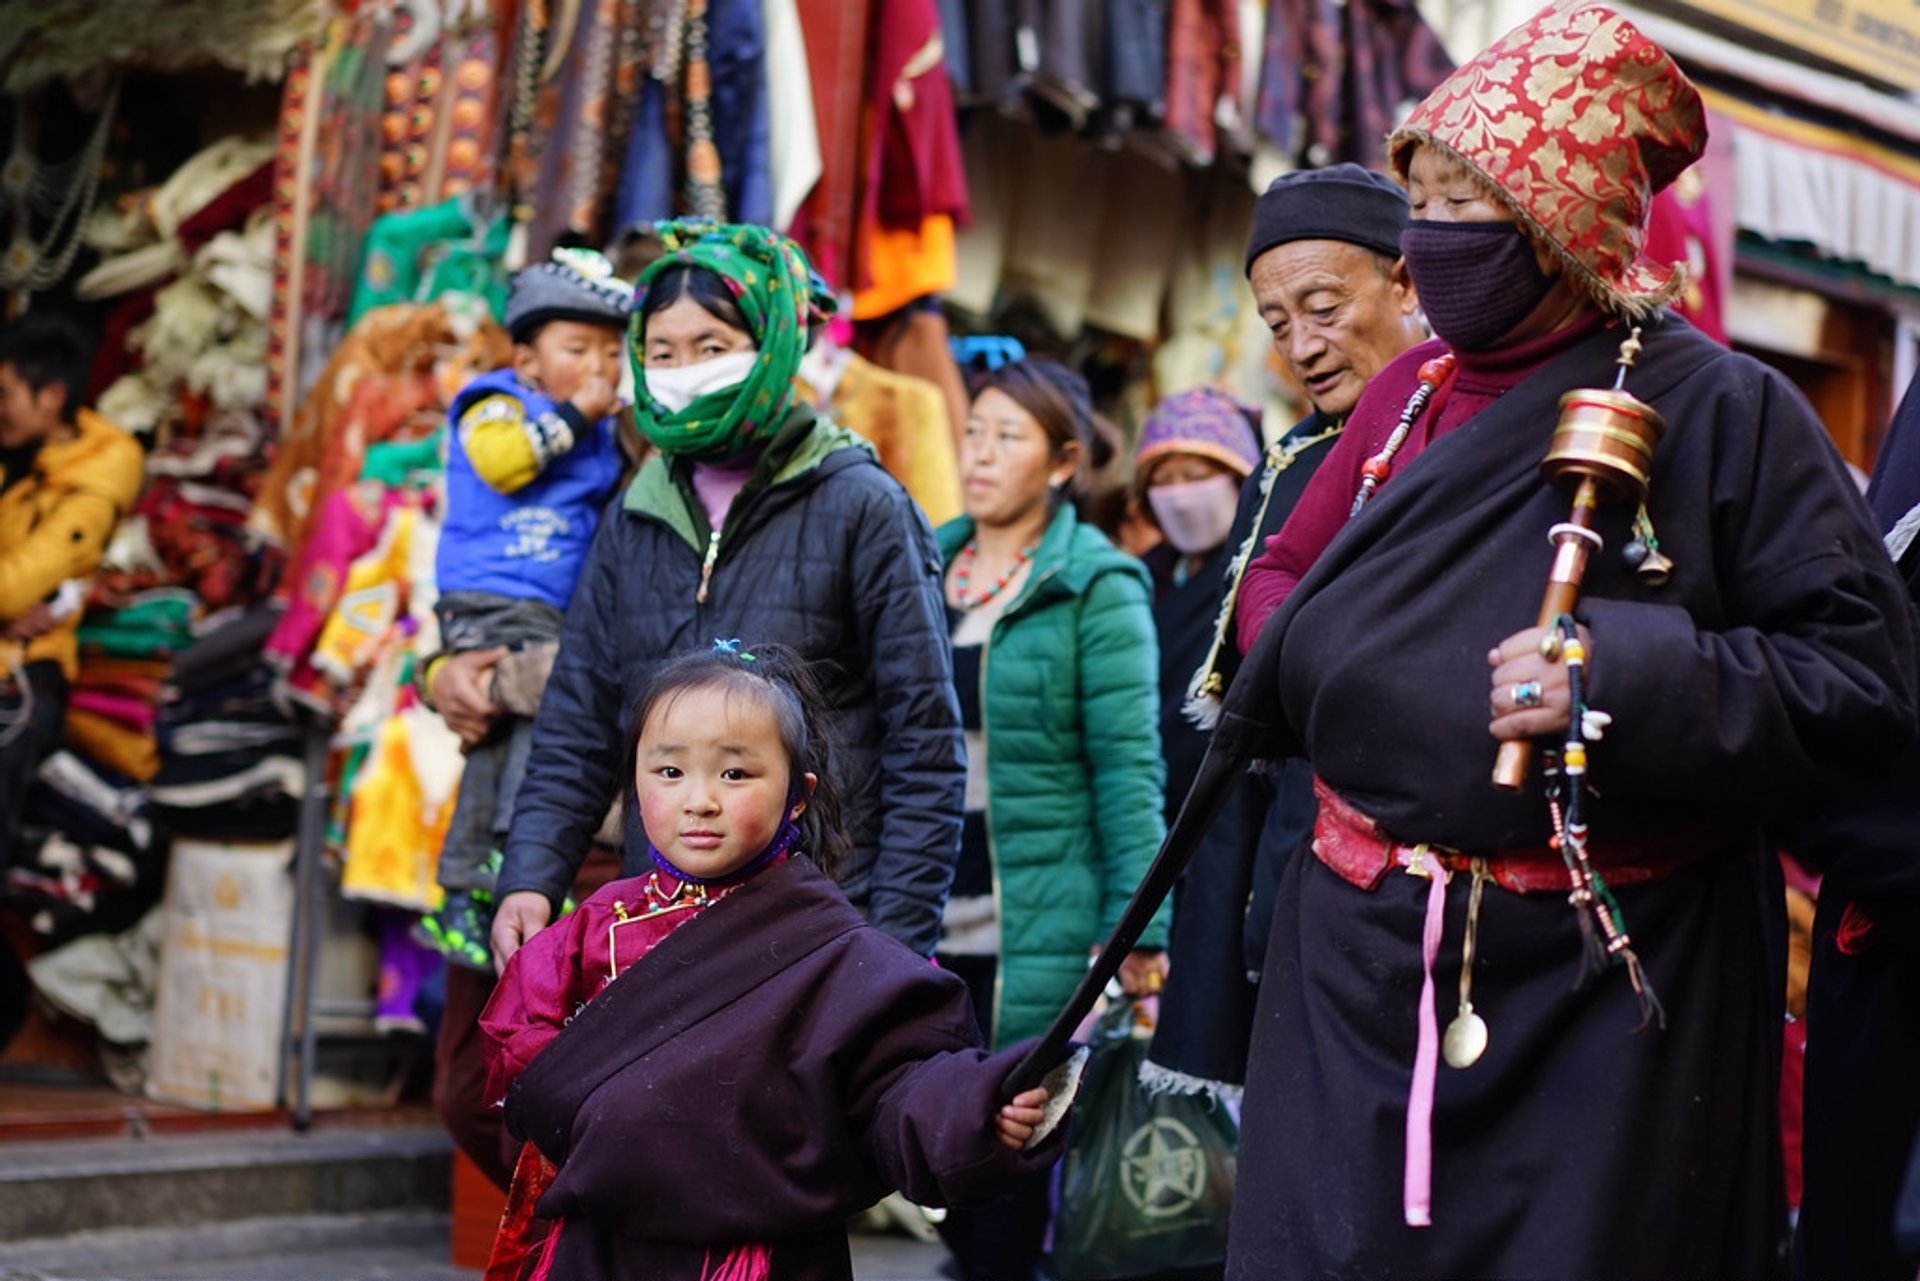 Losar Festival or Tibetian New Year